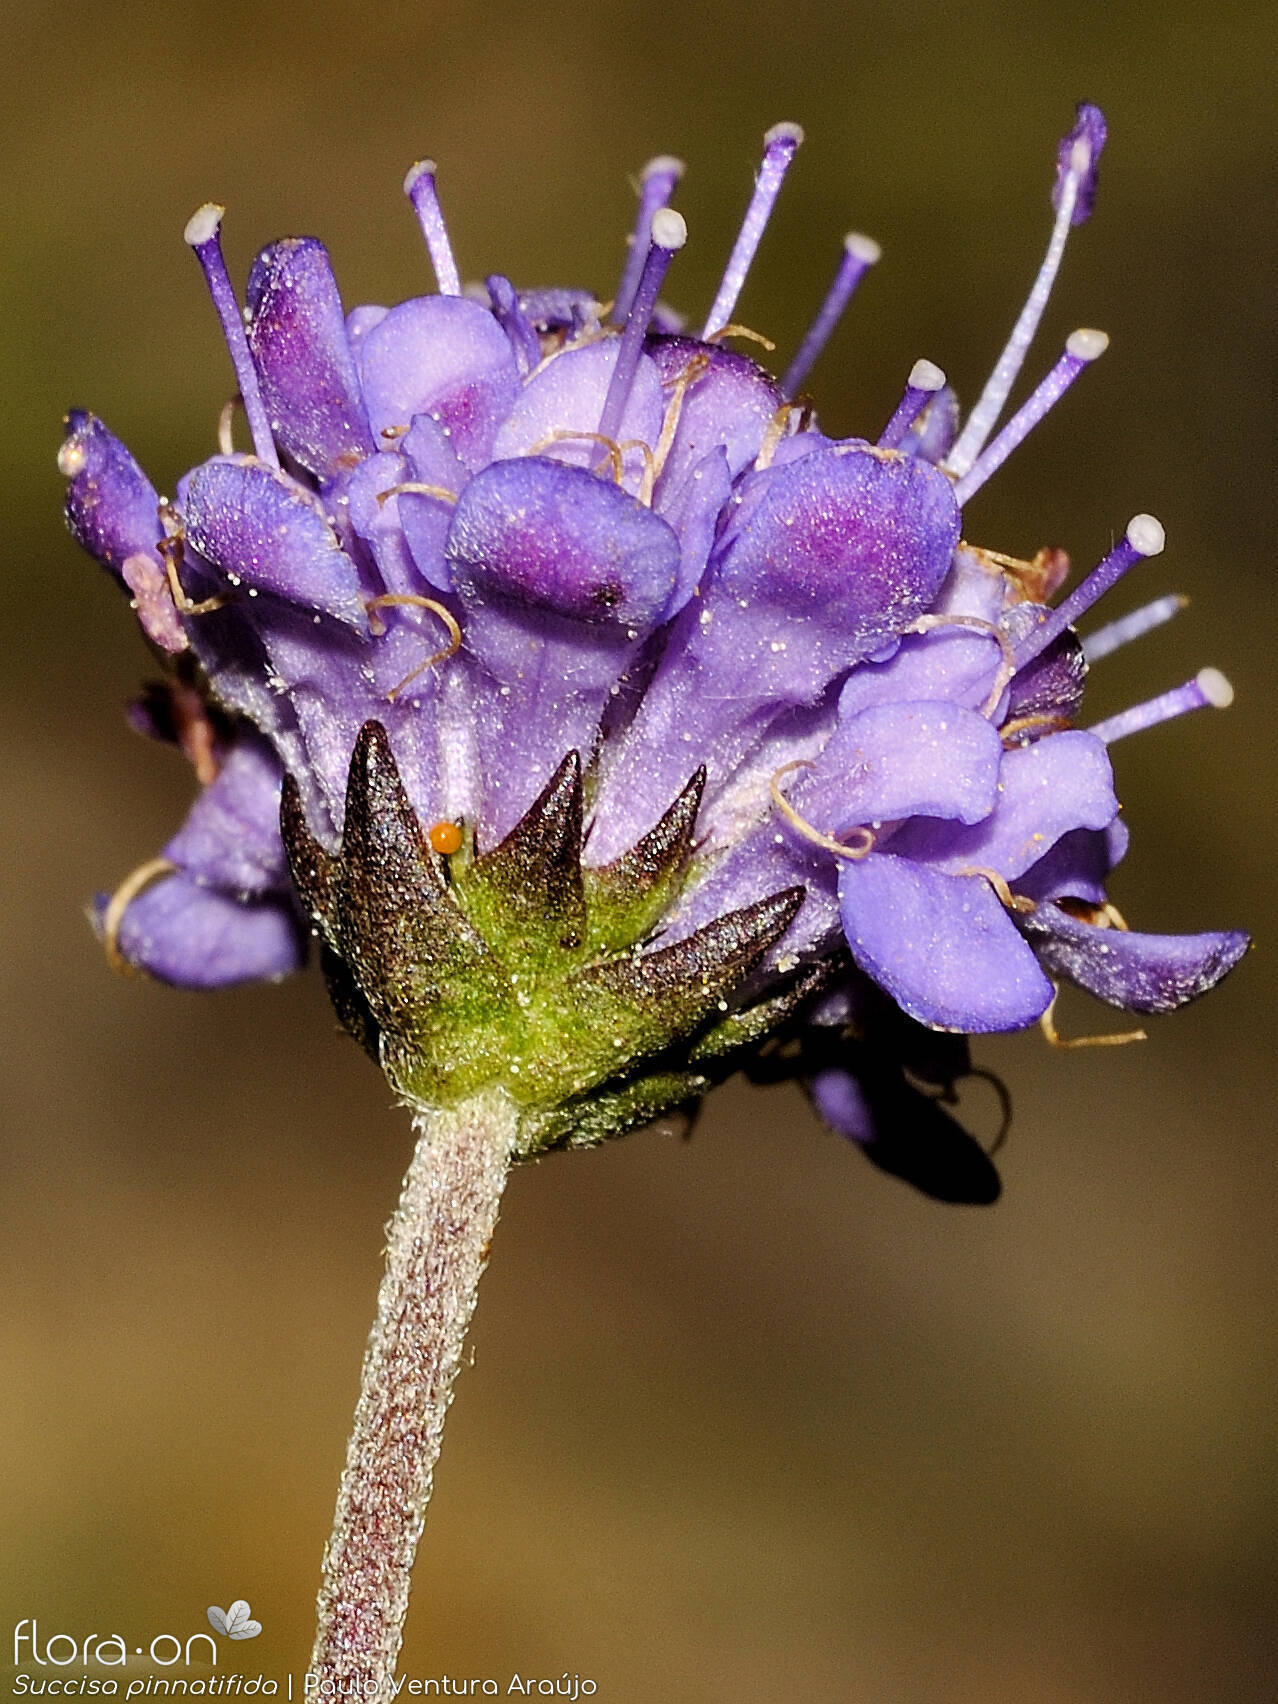 Succisa pinnatifida - Flor (close-up) | Paulo Ventura Araújo; CC BY-NC 4.0